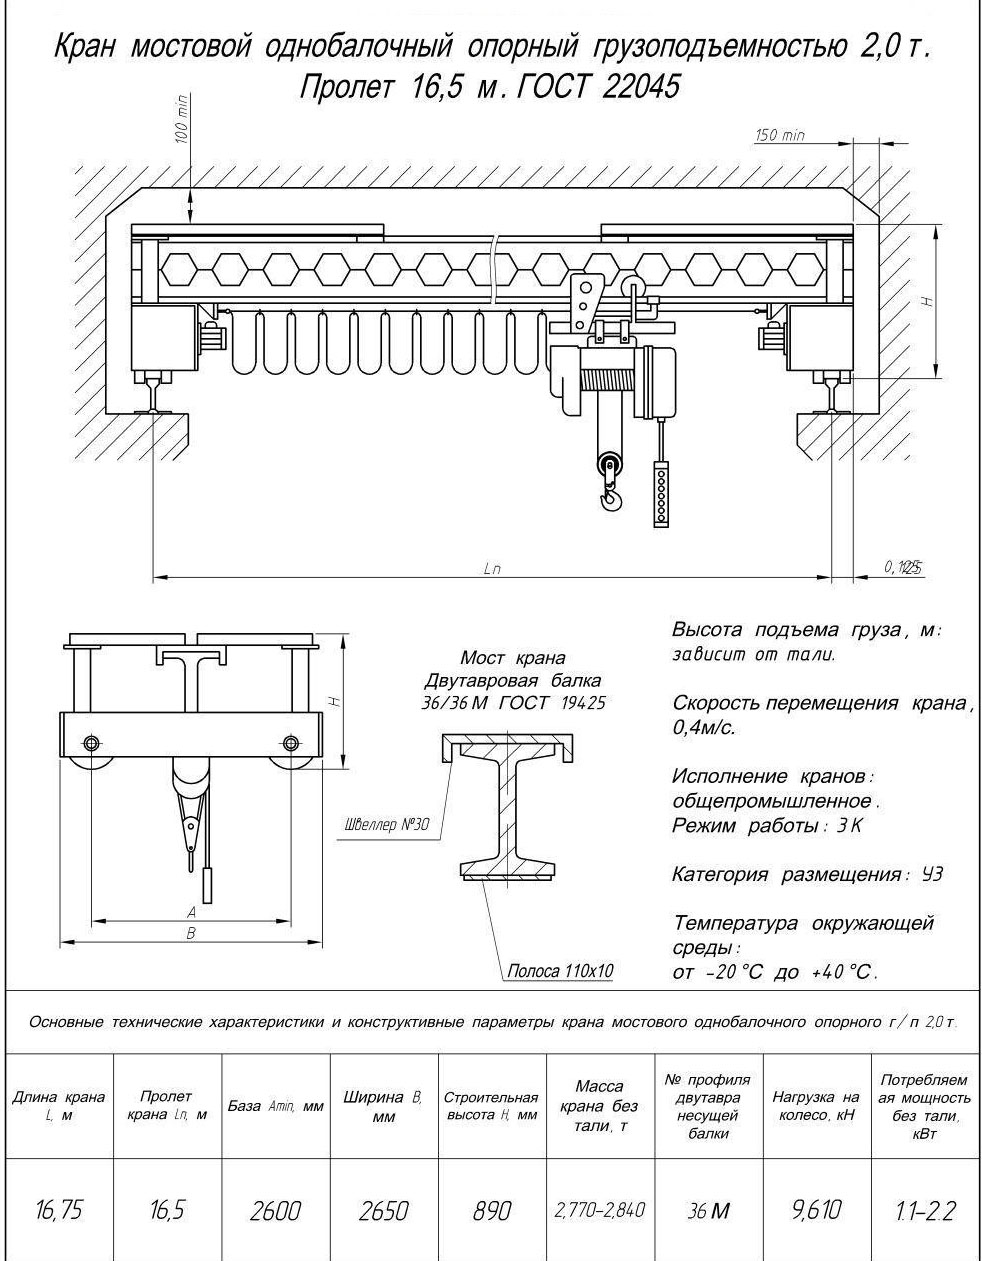 Чертеж и характеристики крана мостового электрического однобалочного опорного 2 т пролет 13,5 м